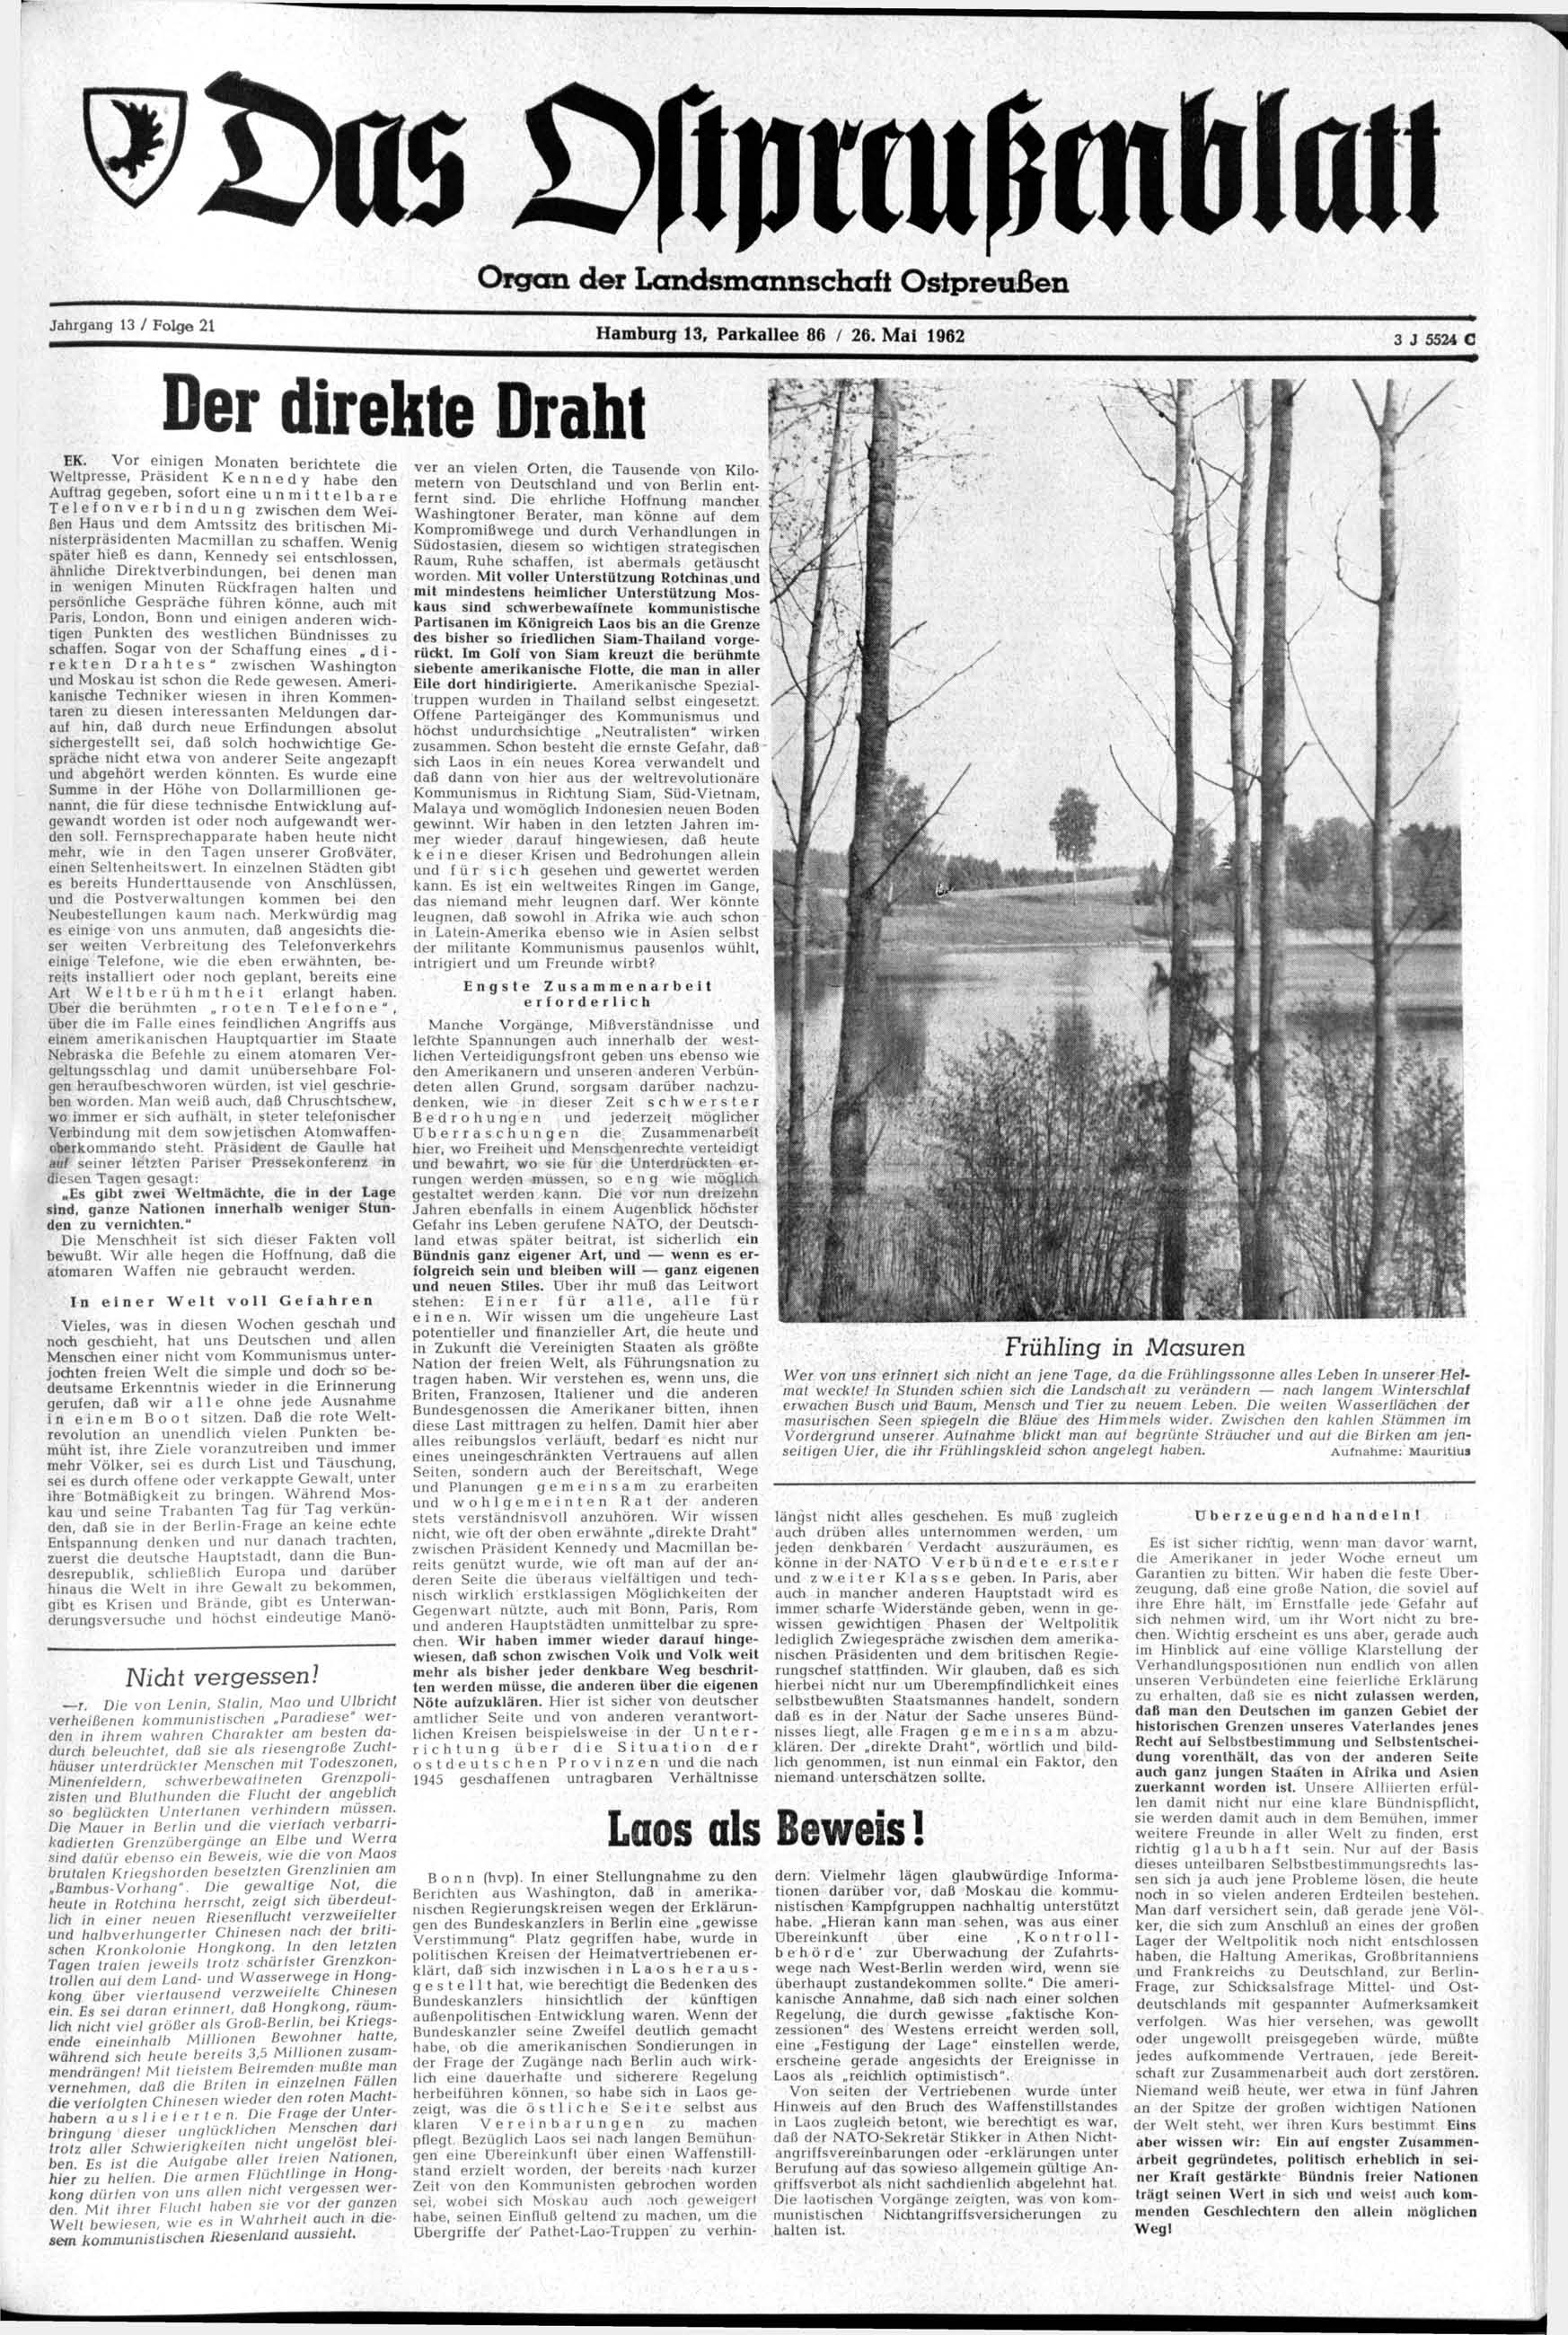 Organ der Landsmannschaft Jahrgang 13 / Folge 21 Hamburg 13, Parkallee 86 / 26. Mai 1962 3 J 5524 G Der direkte Draht EK.